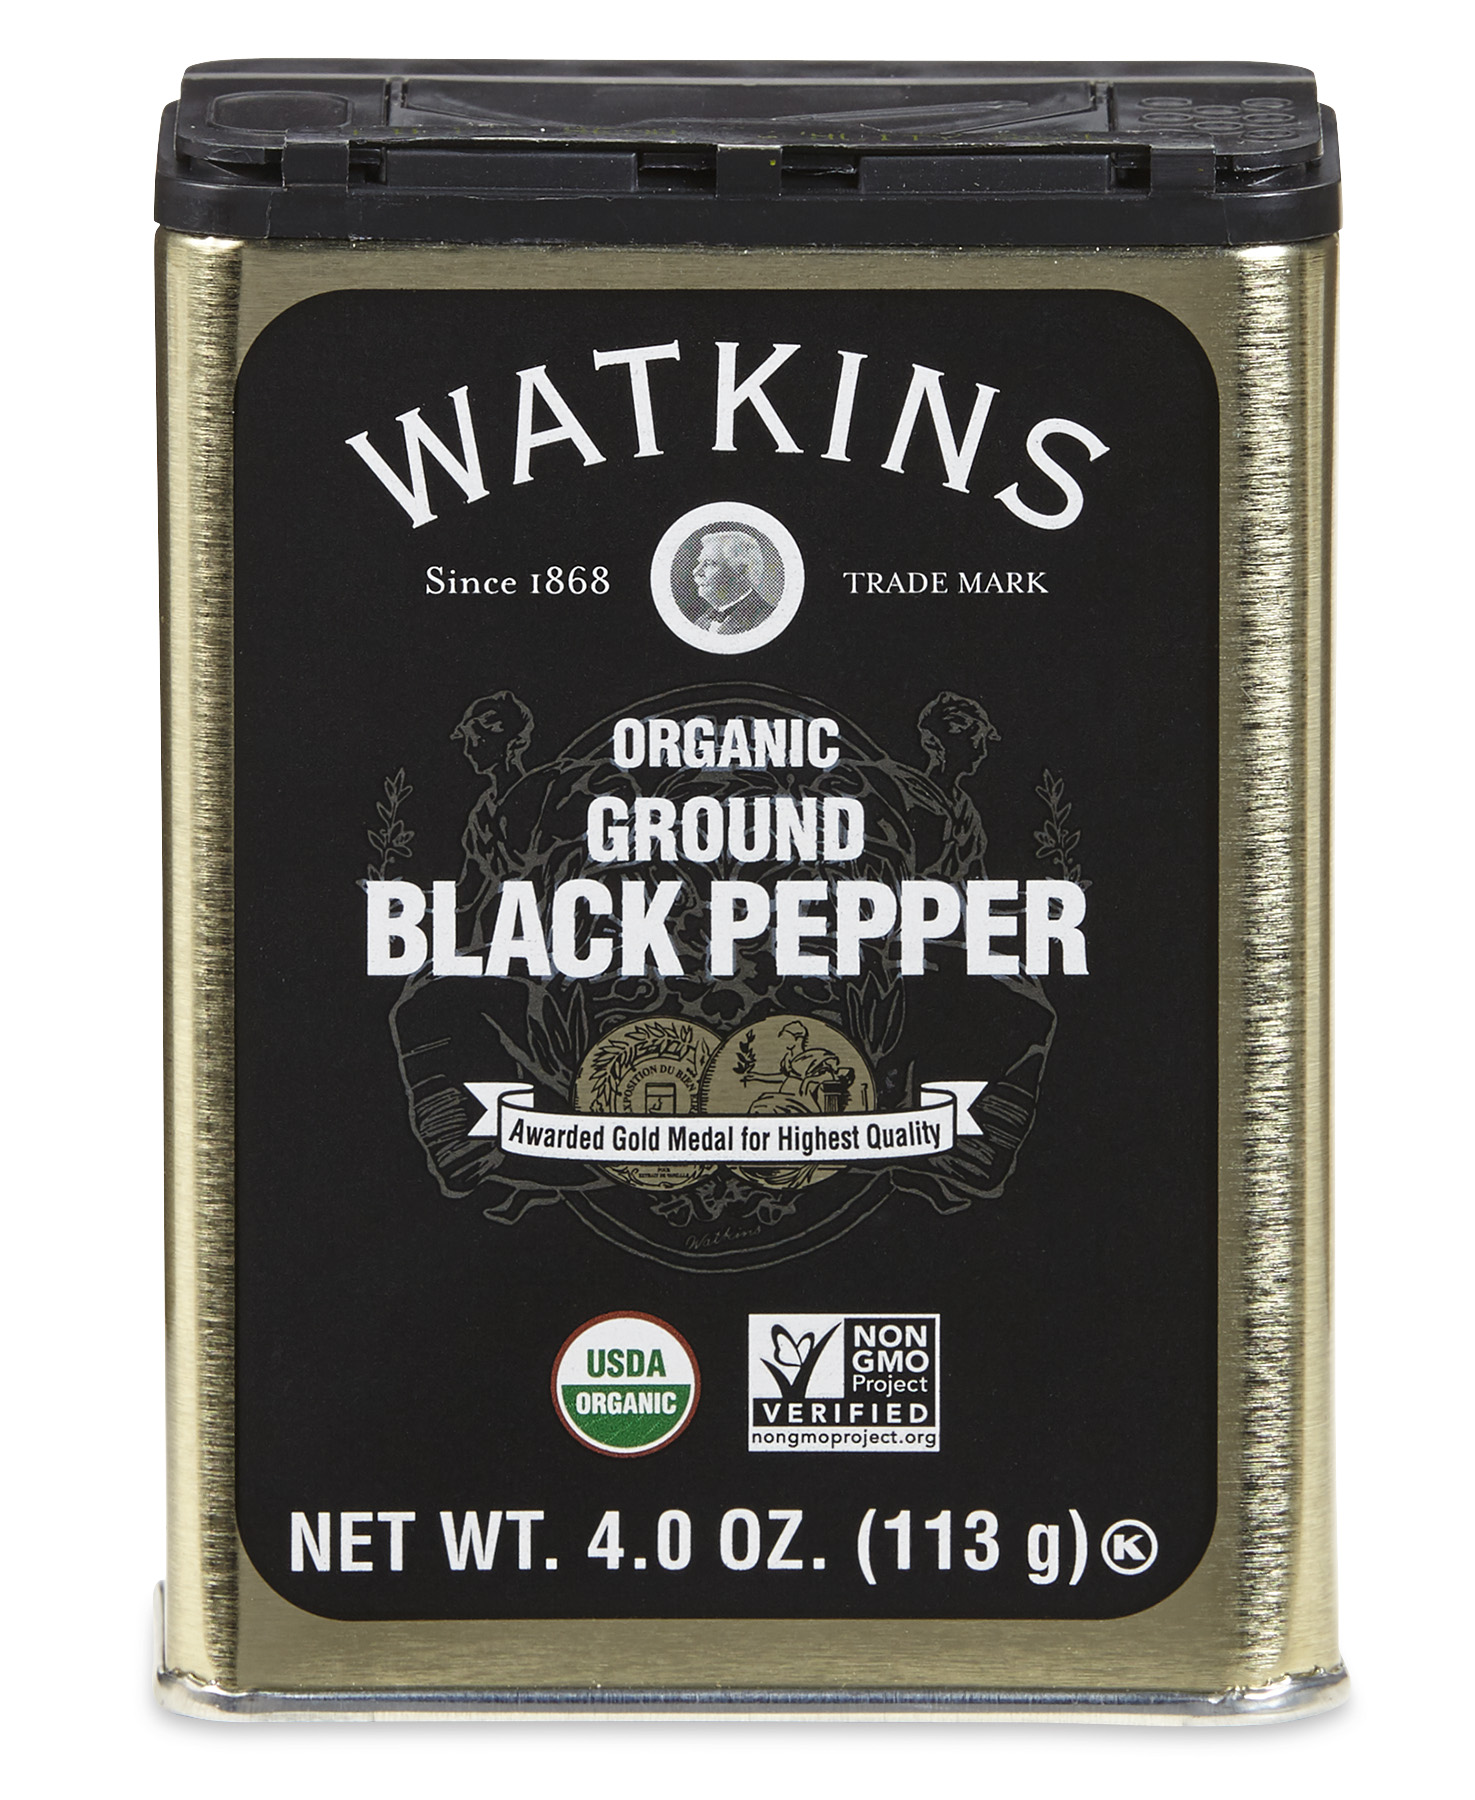 Watkins Gourmet Organic Spice Tin, Ground Black Pepper - Walmart.com - Walmart.com